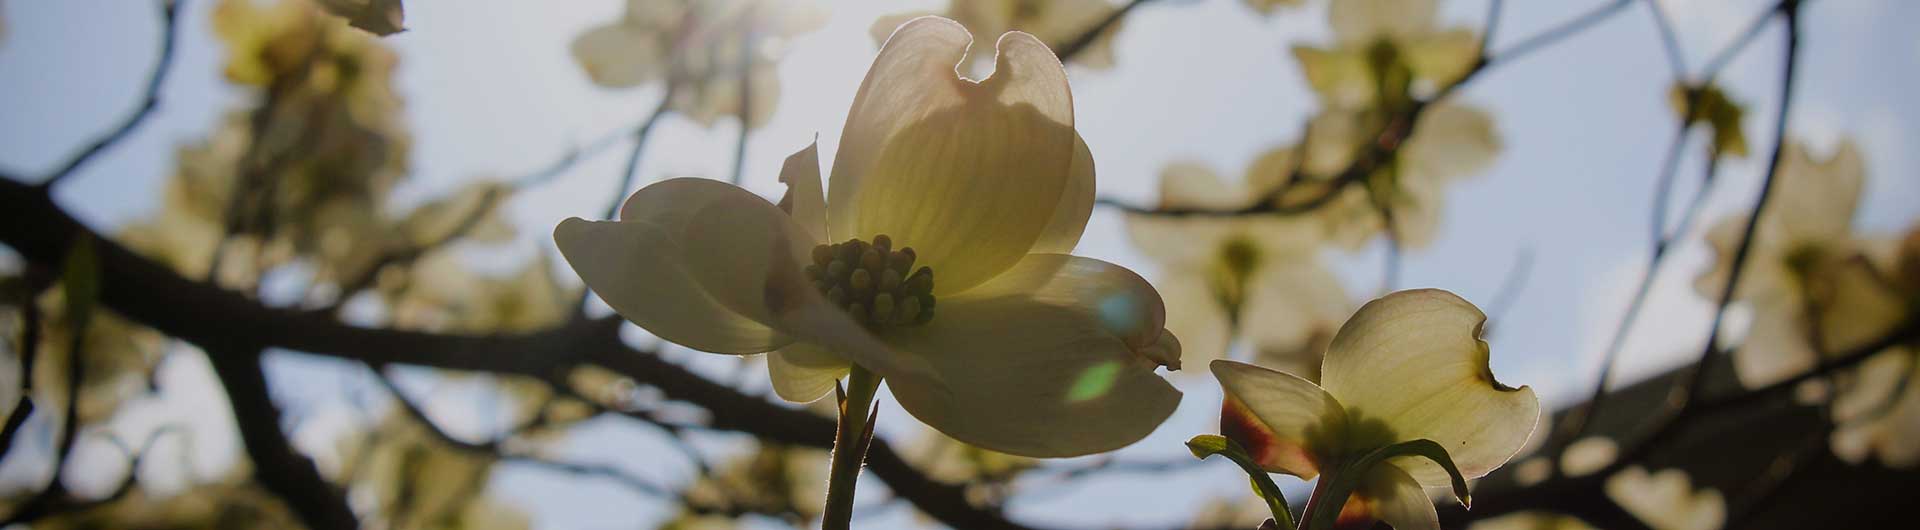 Flowering dogwood blossom, North Carolina's state flower.